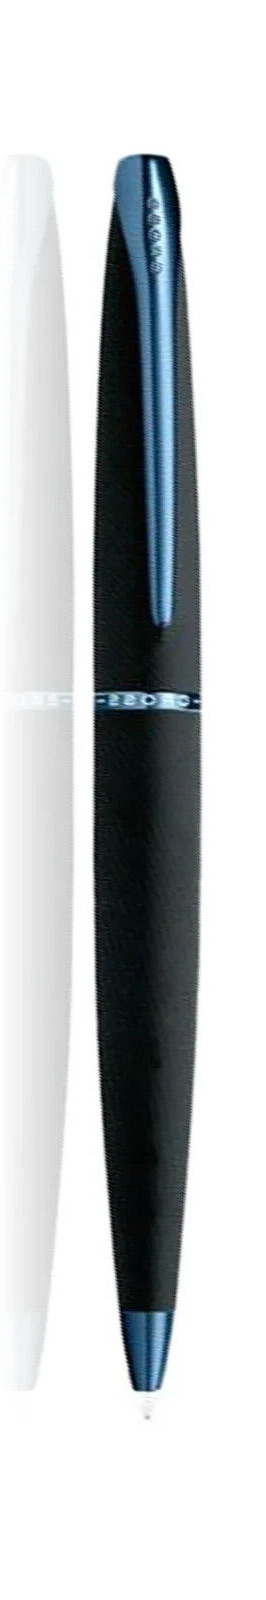 Cross ATX  Ballpoint Pen Basalt Black Blue Pvd  New In Box 882-39